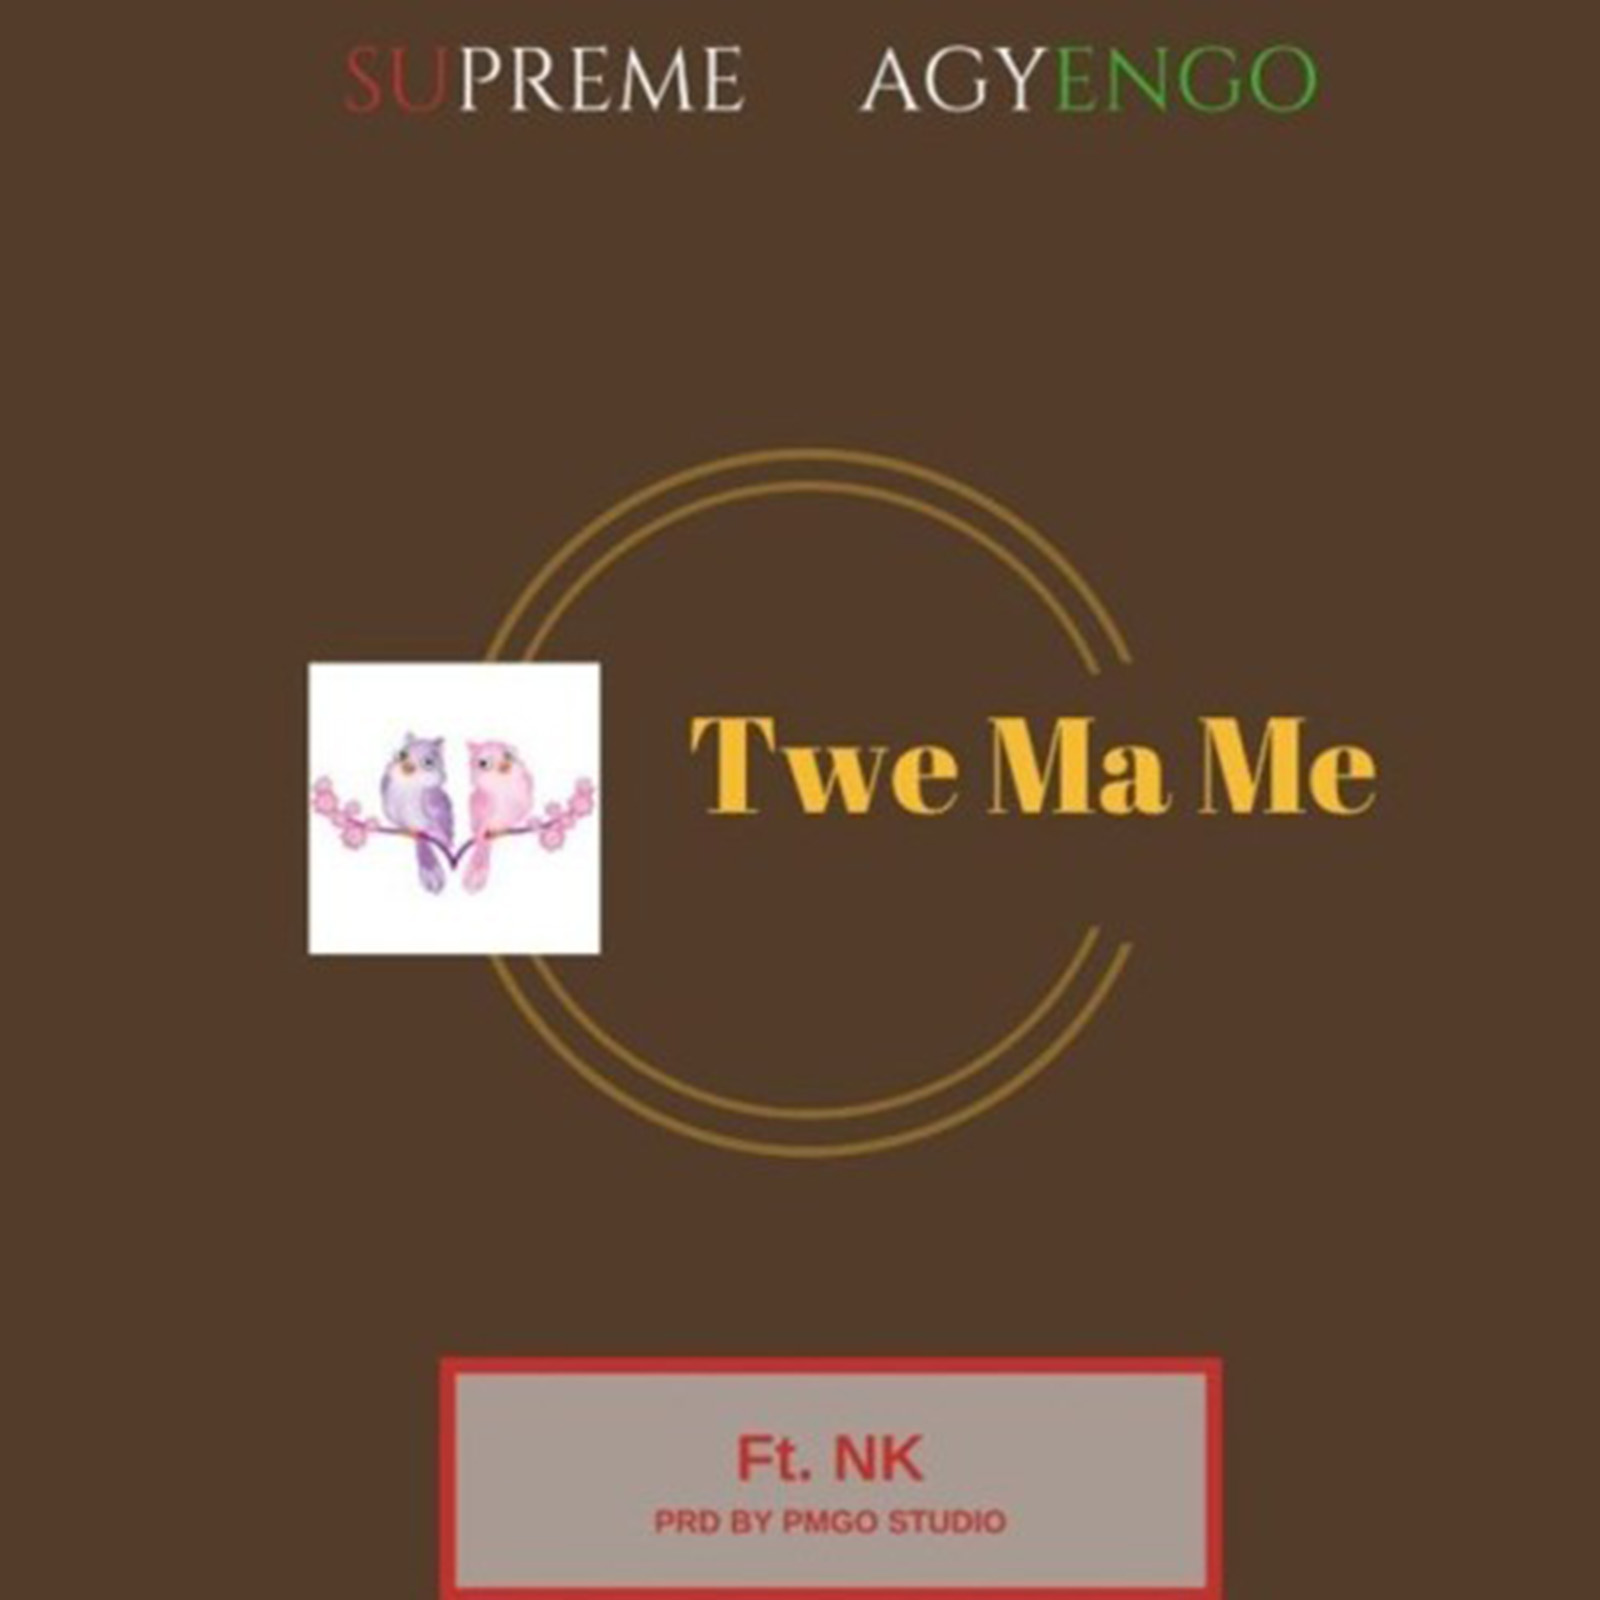 Twe Ma Me by Supreme Agyengo feat. NK